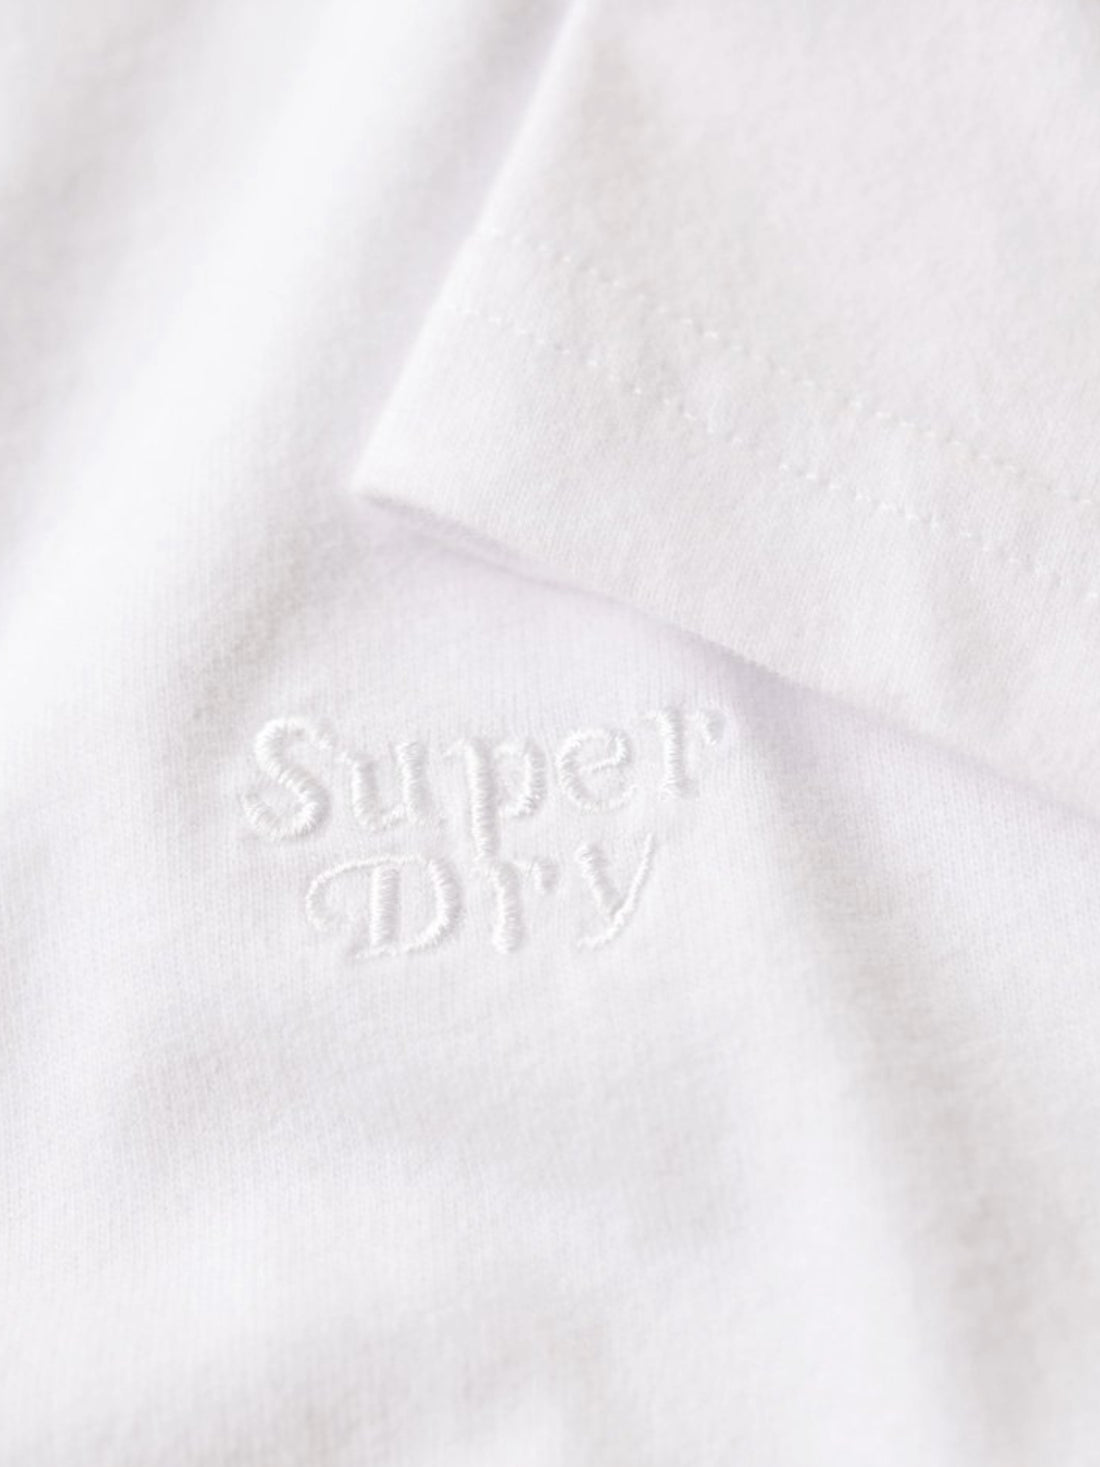 T-shirt Bianco Superdry